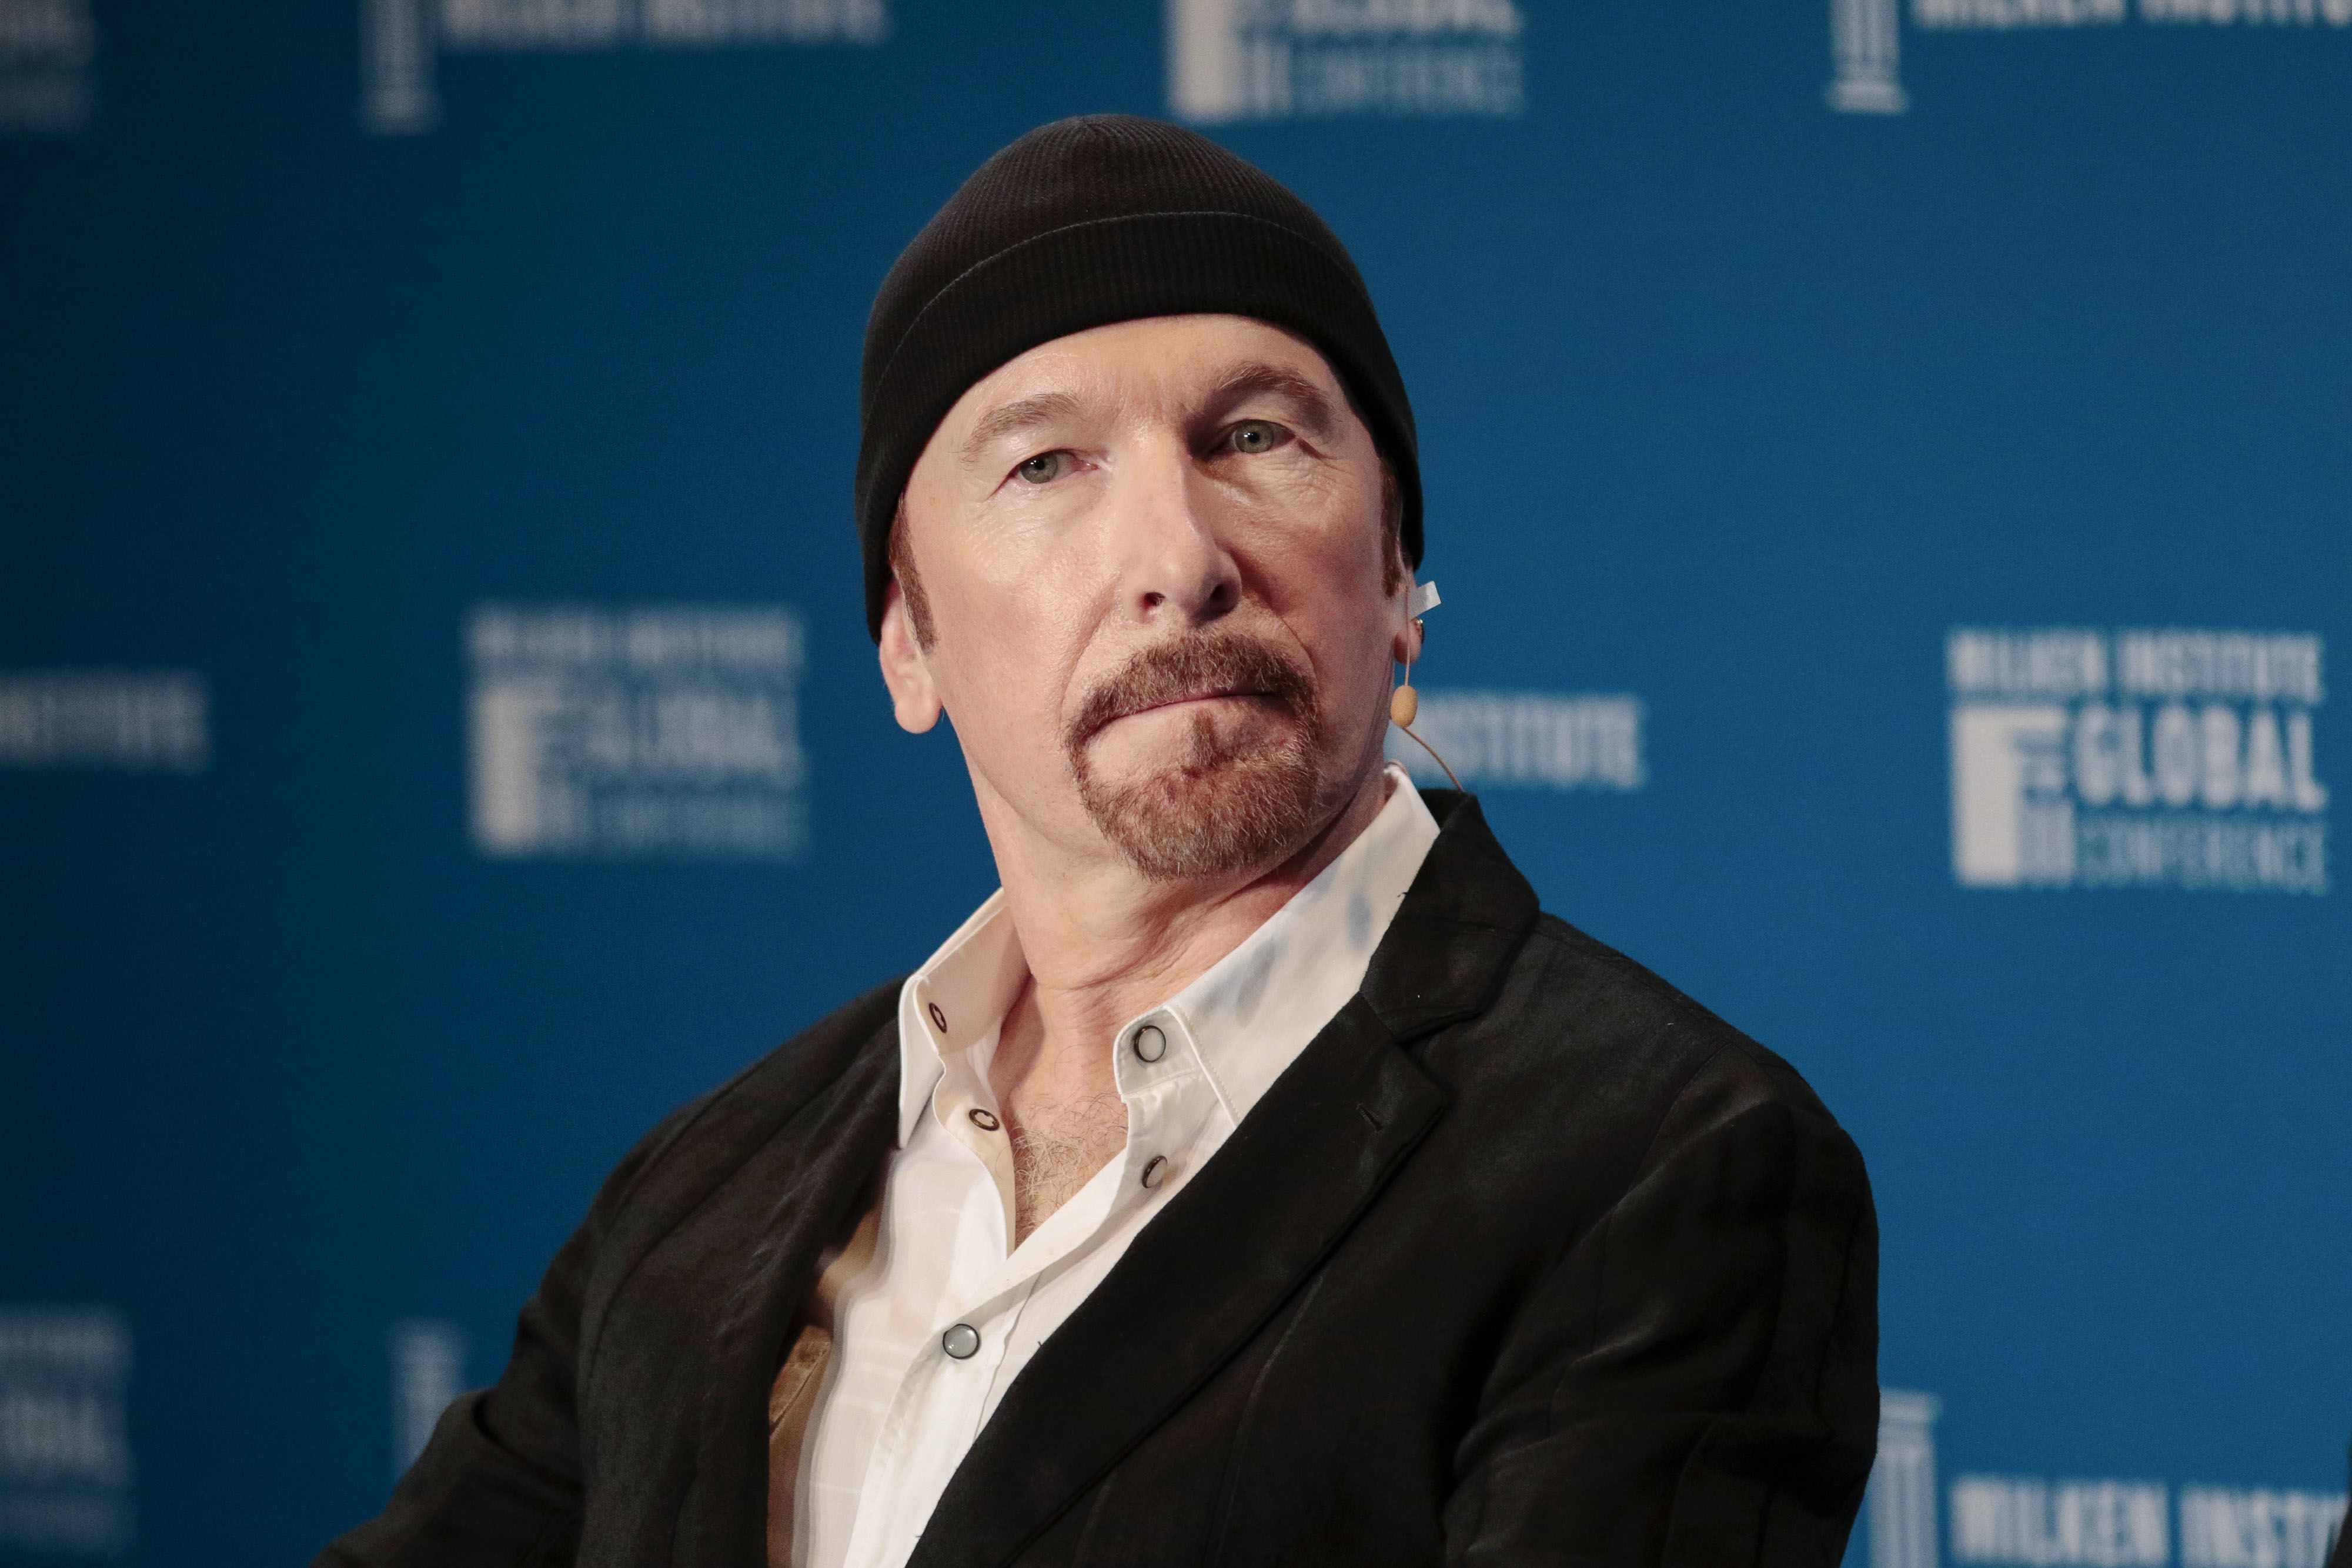 U2's The Edge denied bid to build Malibu compound after 14-year battle